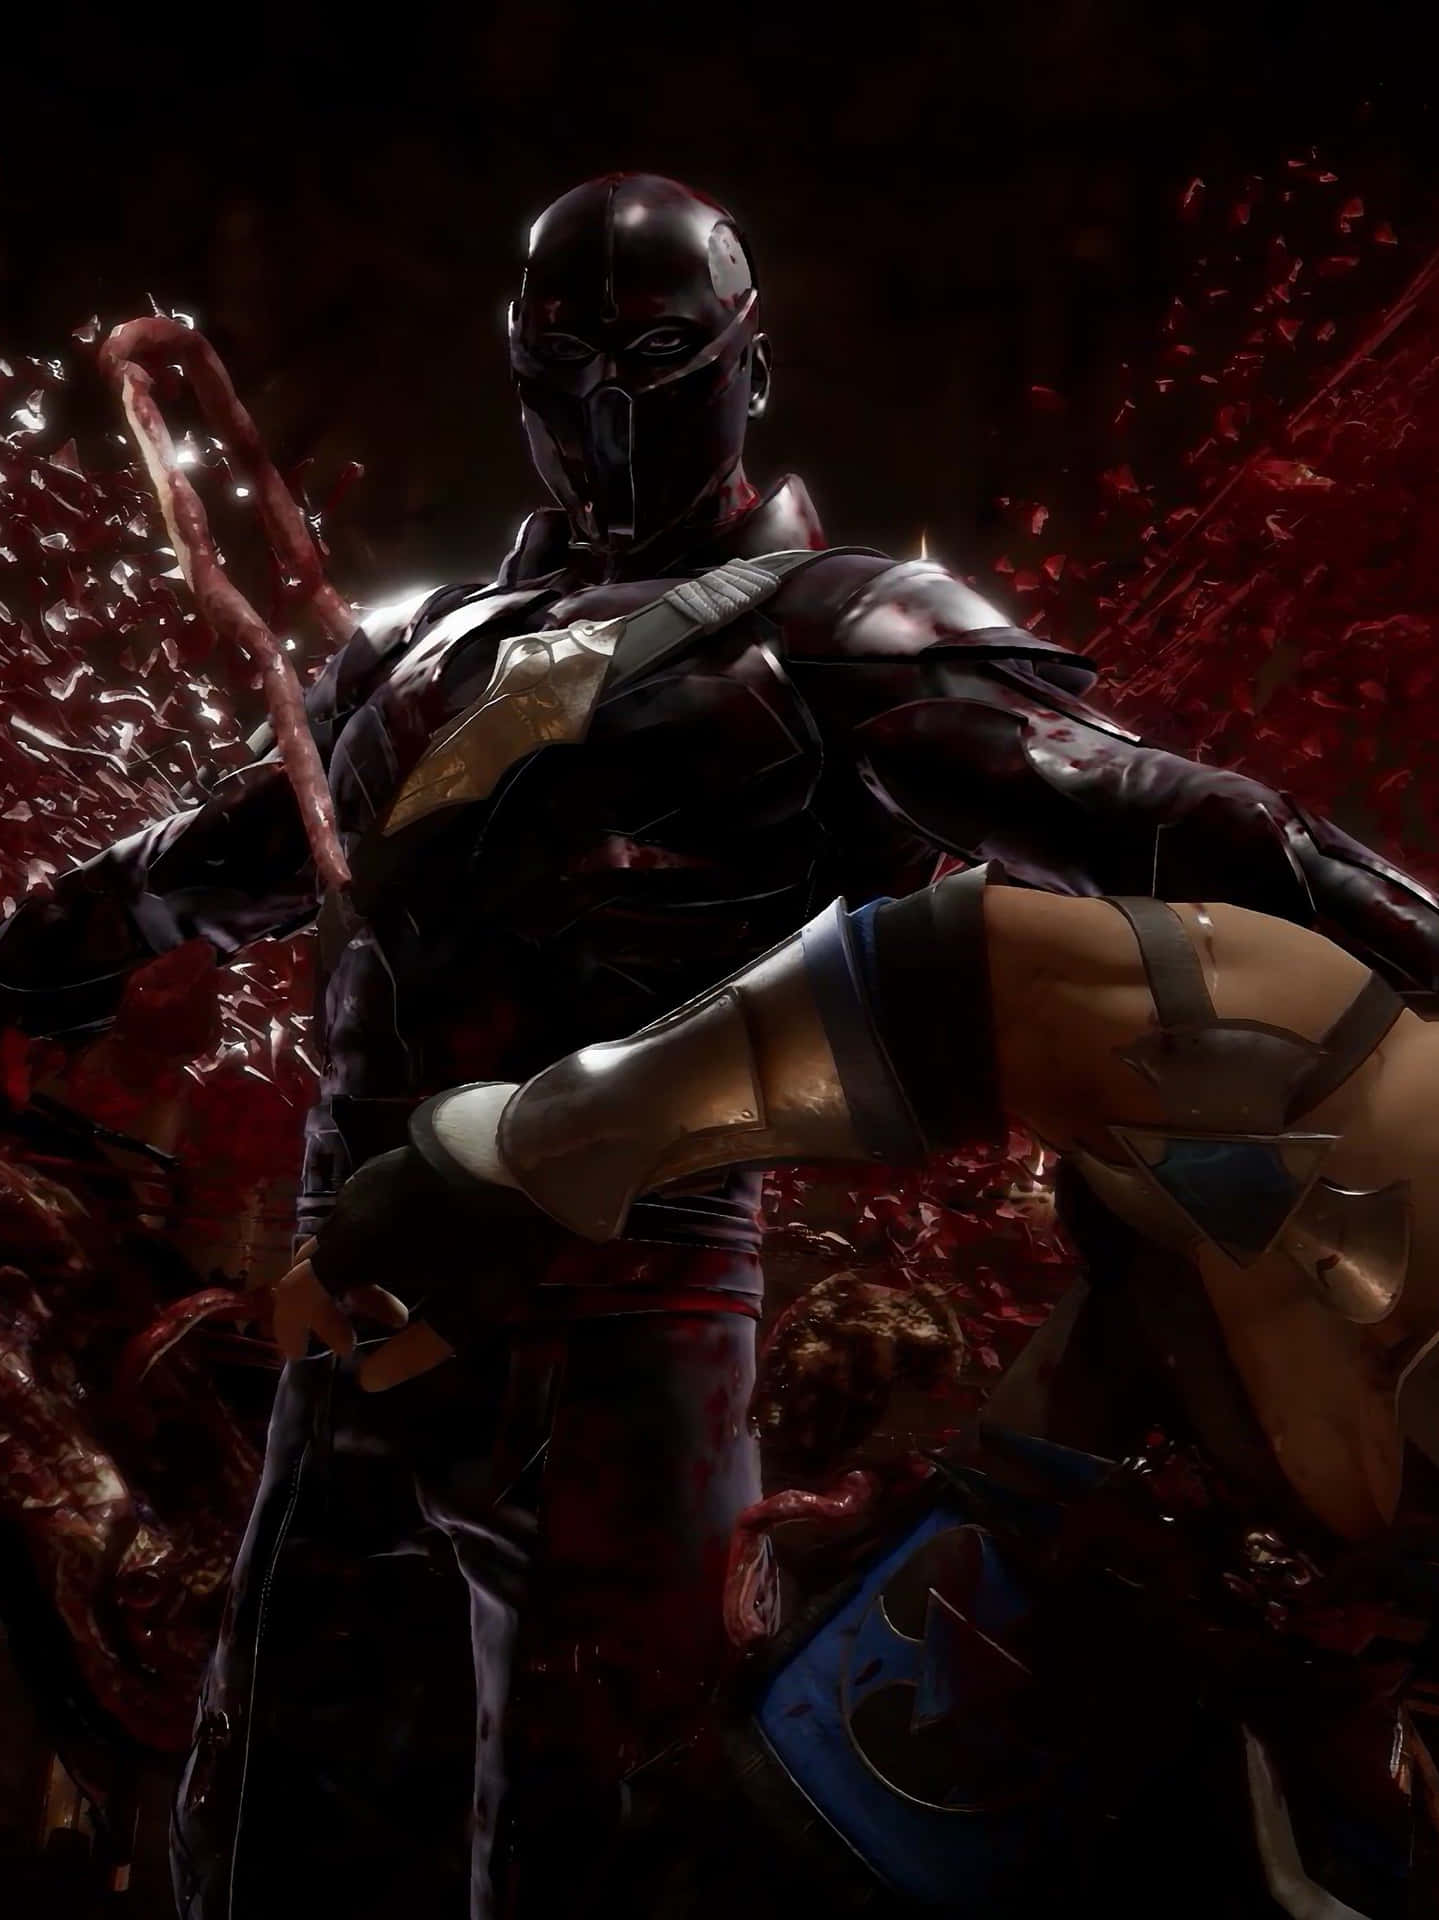 Mortal Kombat Fatality - Ultimate Finisher Move Wallpaper